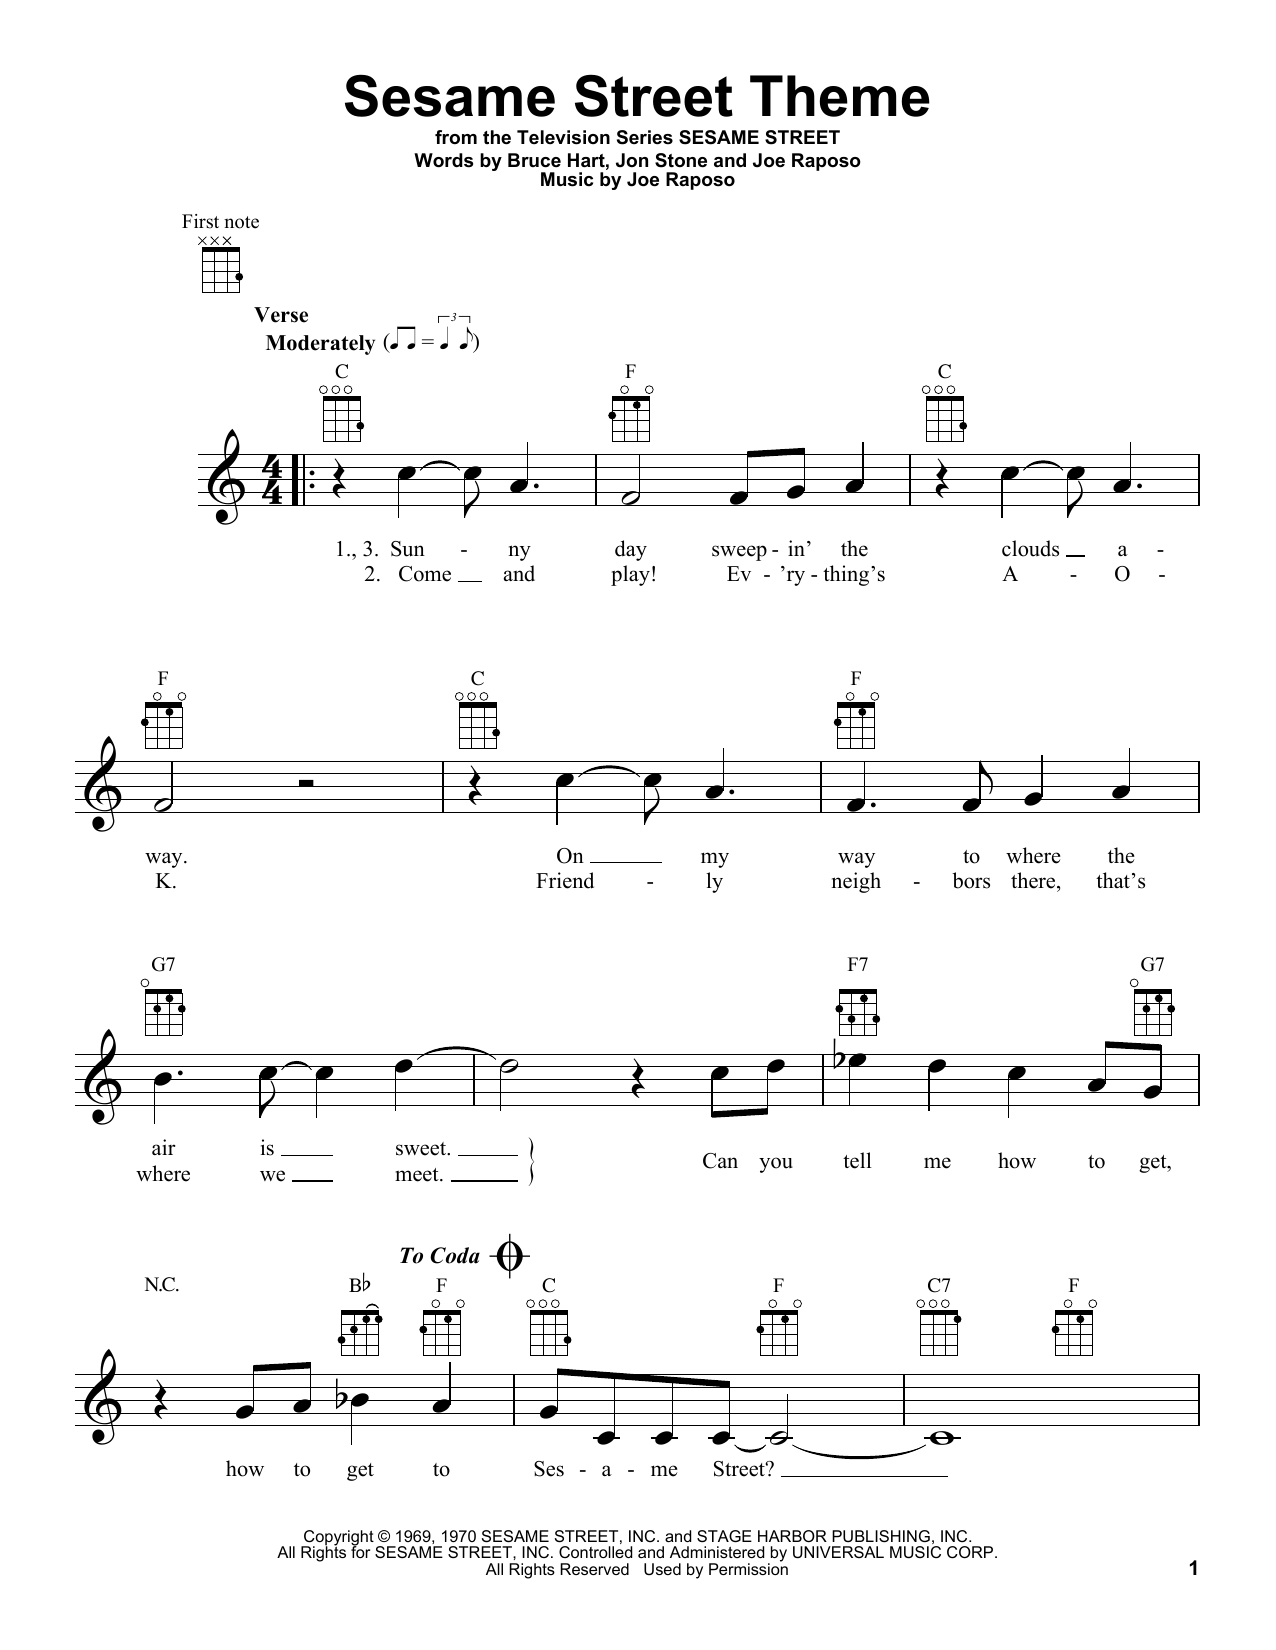 Bruce Hart Sesame Street Theme Sheet Music Notes & Chords for Ukulele - Download or Print PDF